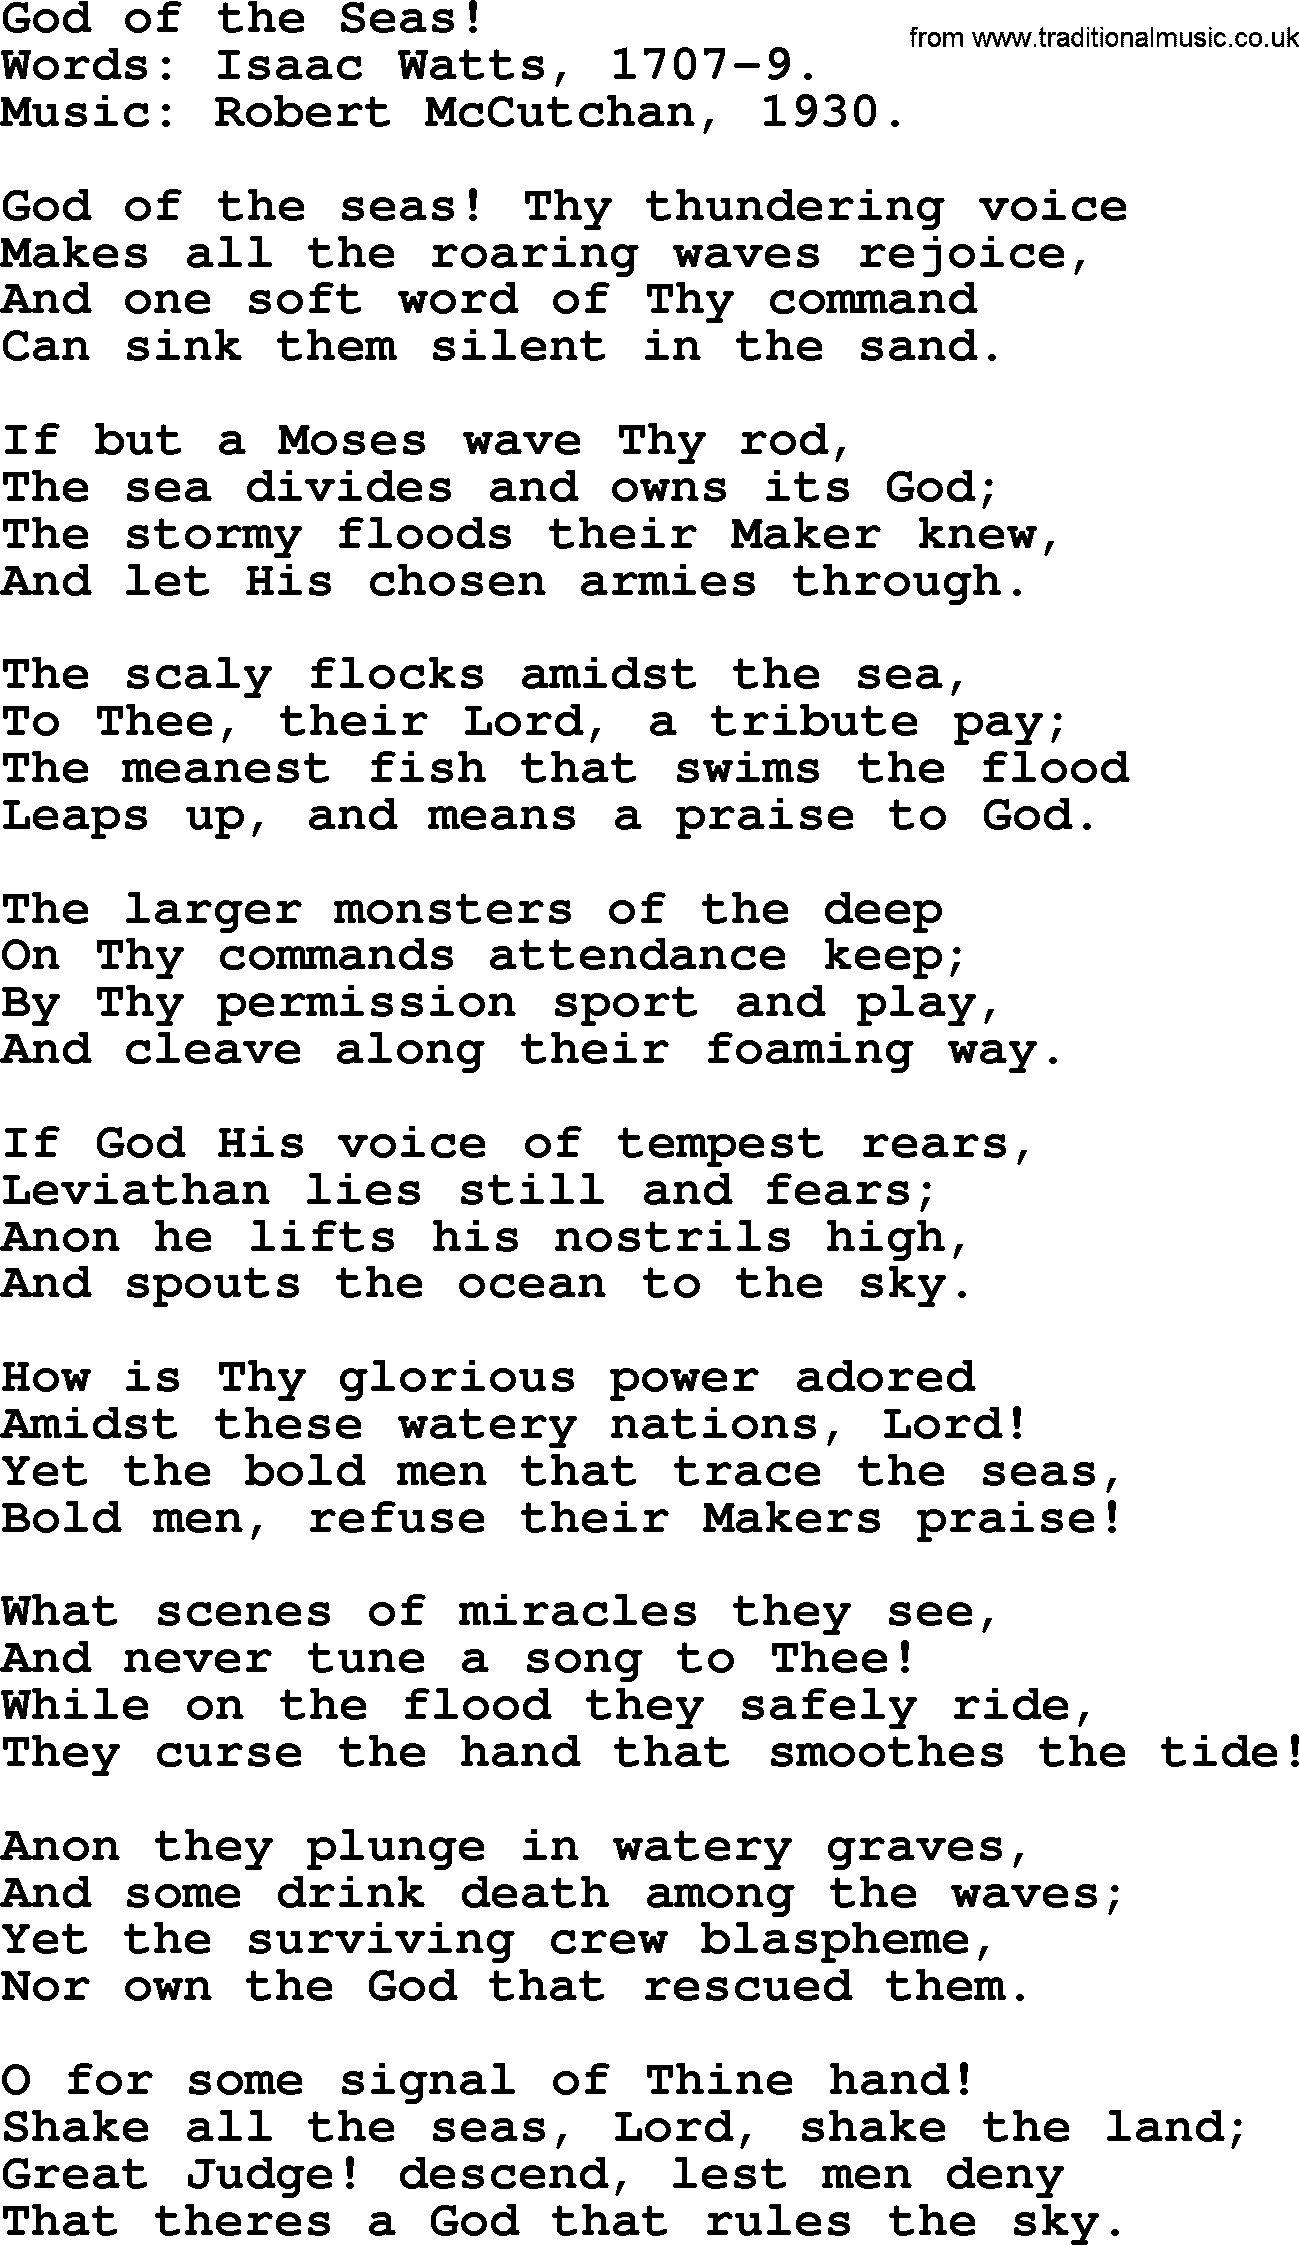 God of the Seas!, by Isaac Watts - Christian lyrics